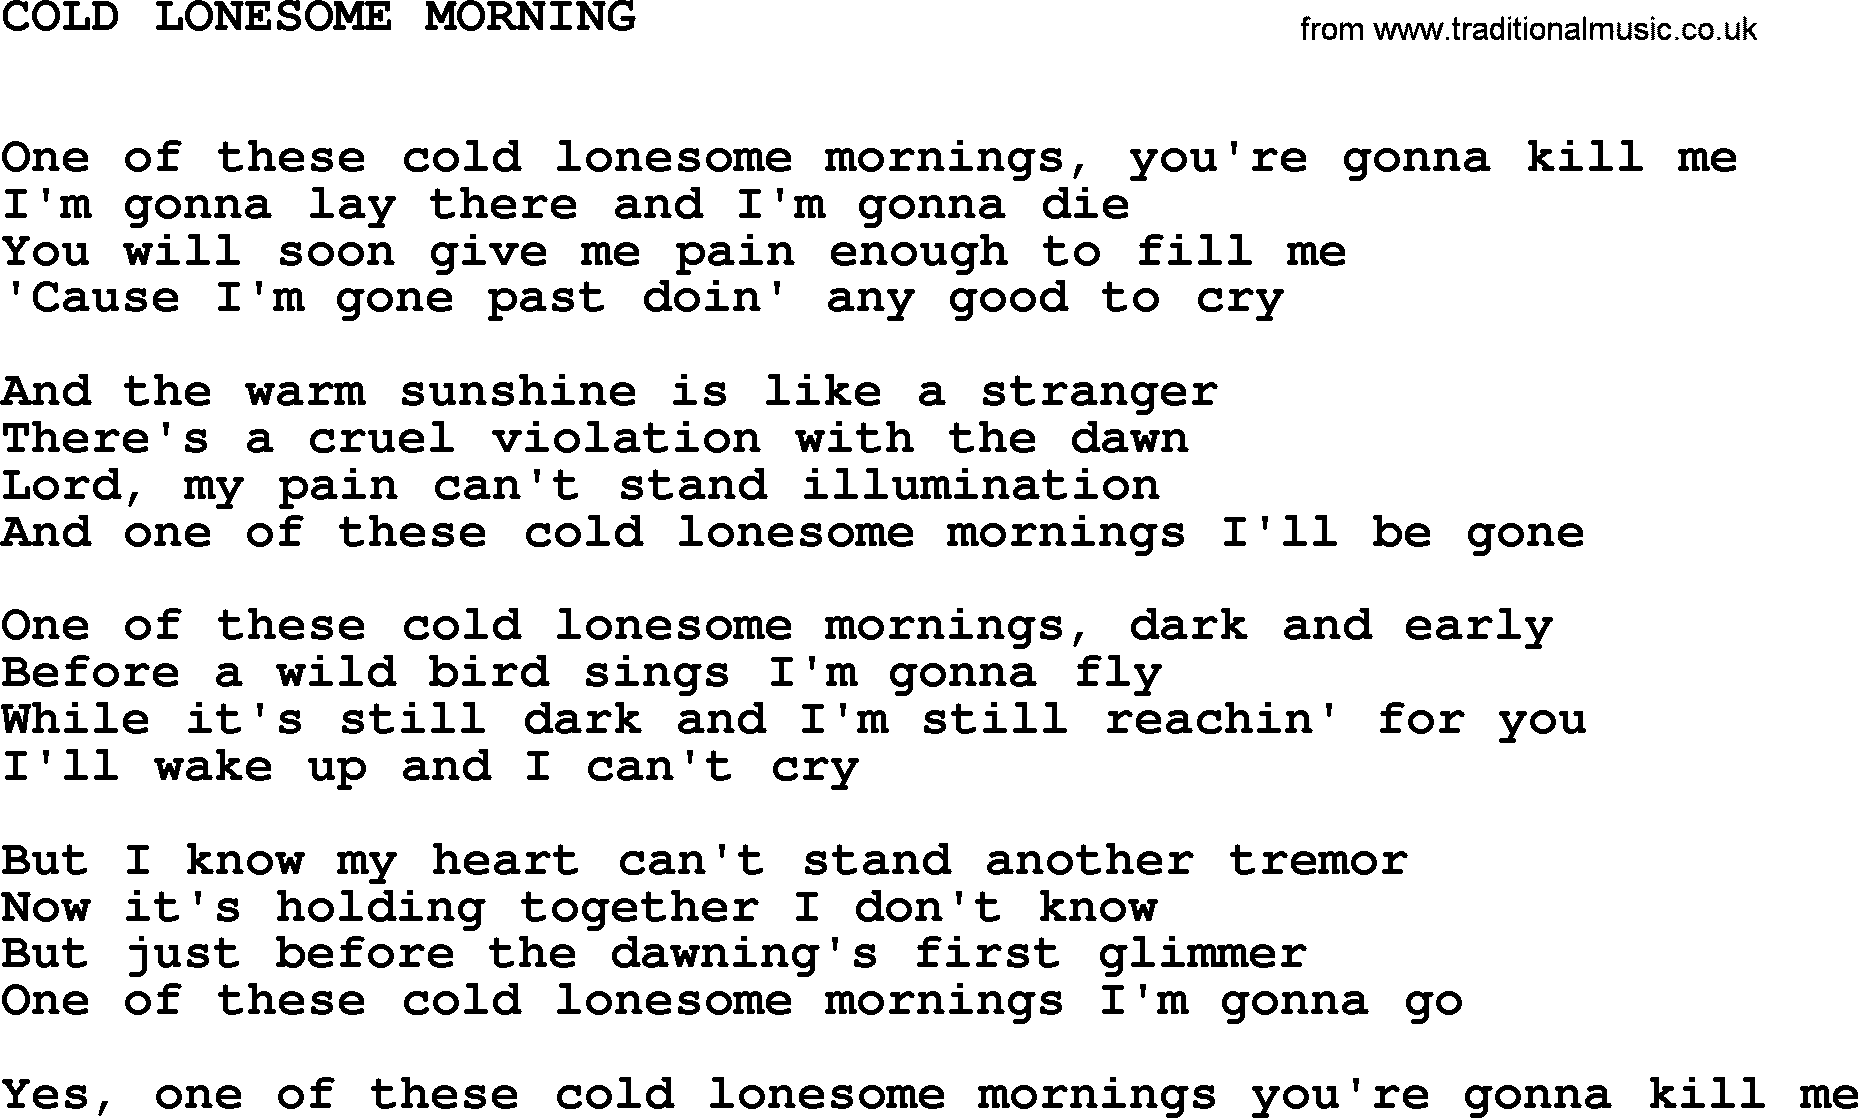 Johnny Cash song Cold Lonesome Morning.txt lyrics